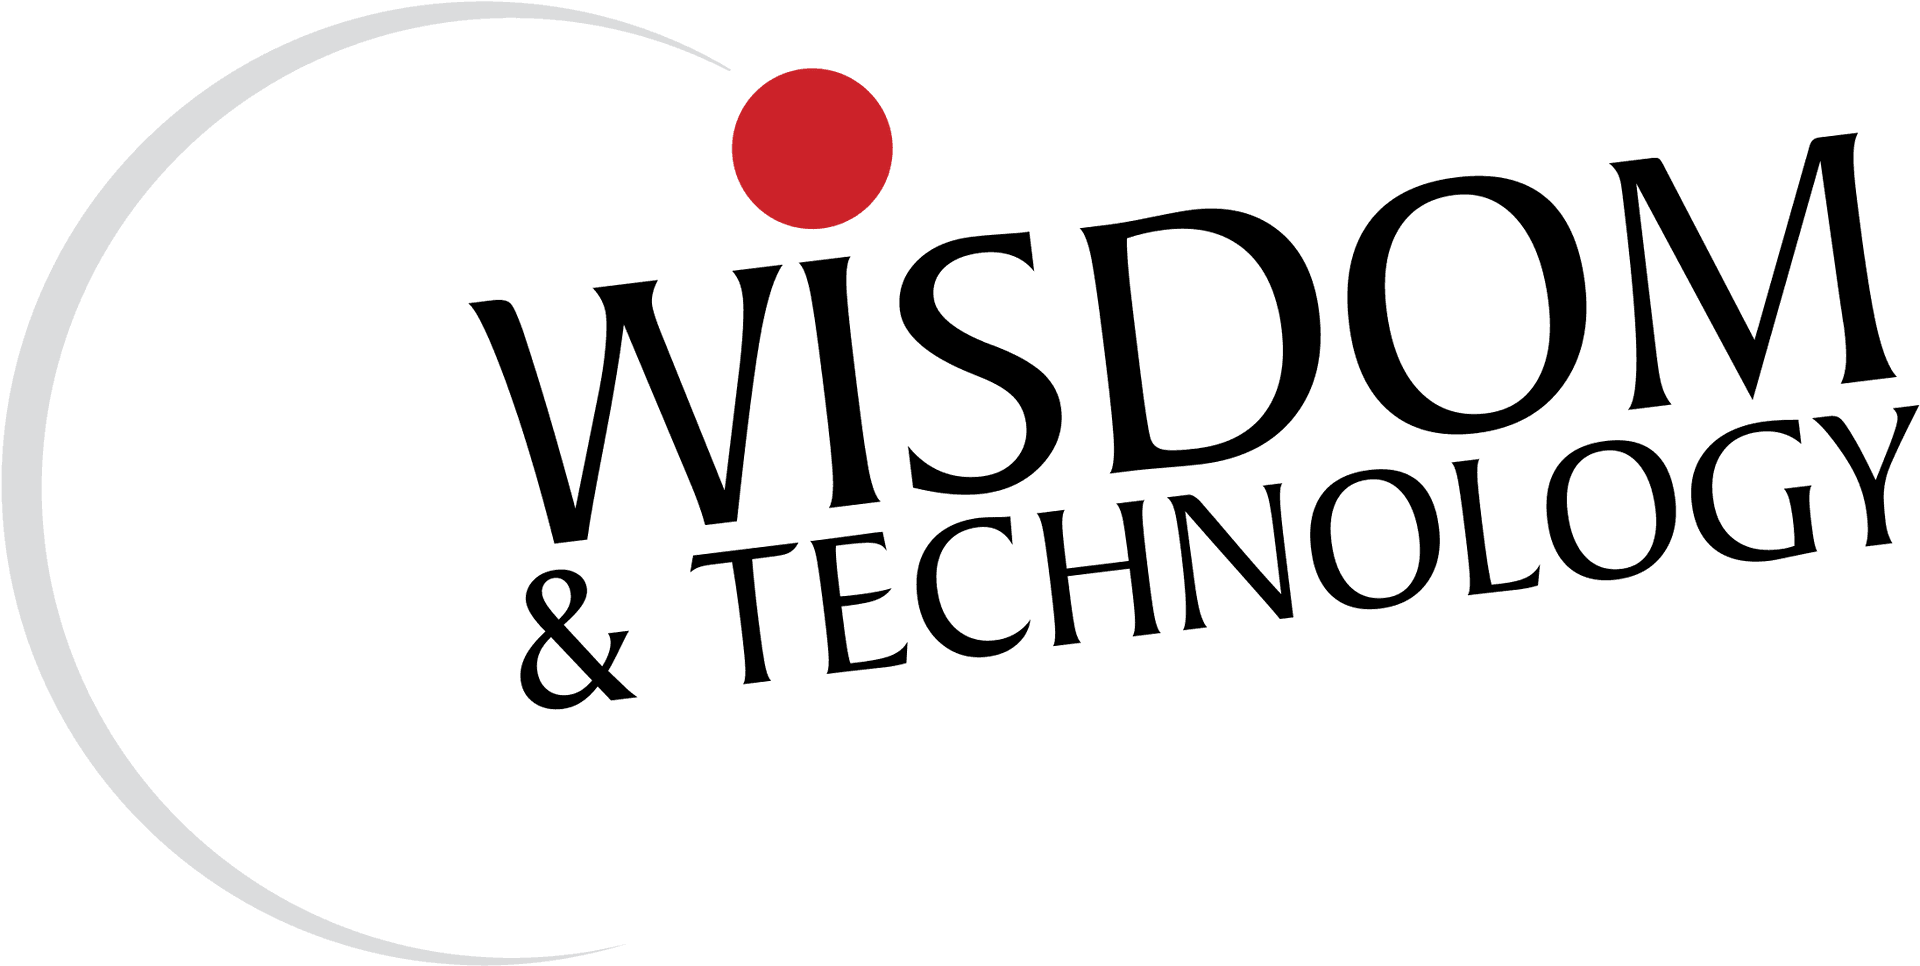 Wisdomand Technology Logo PNG image